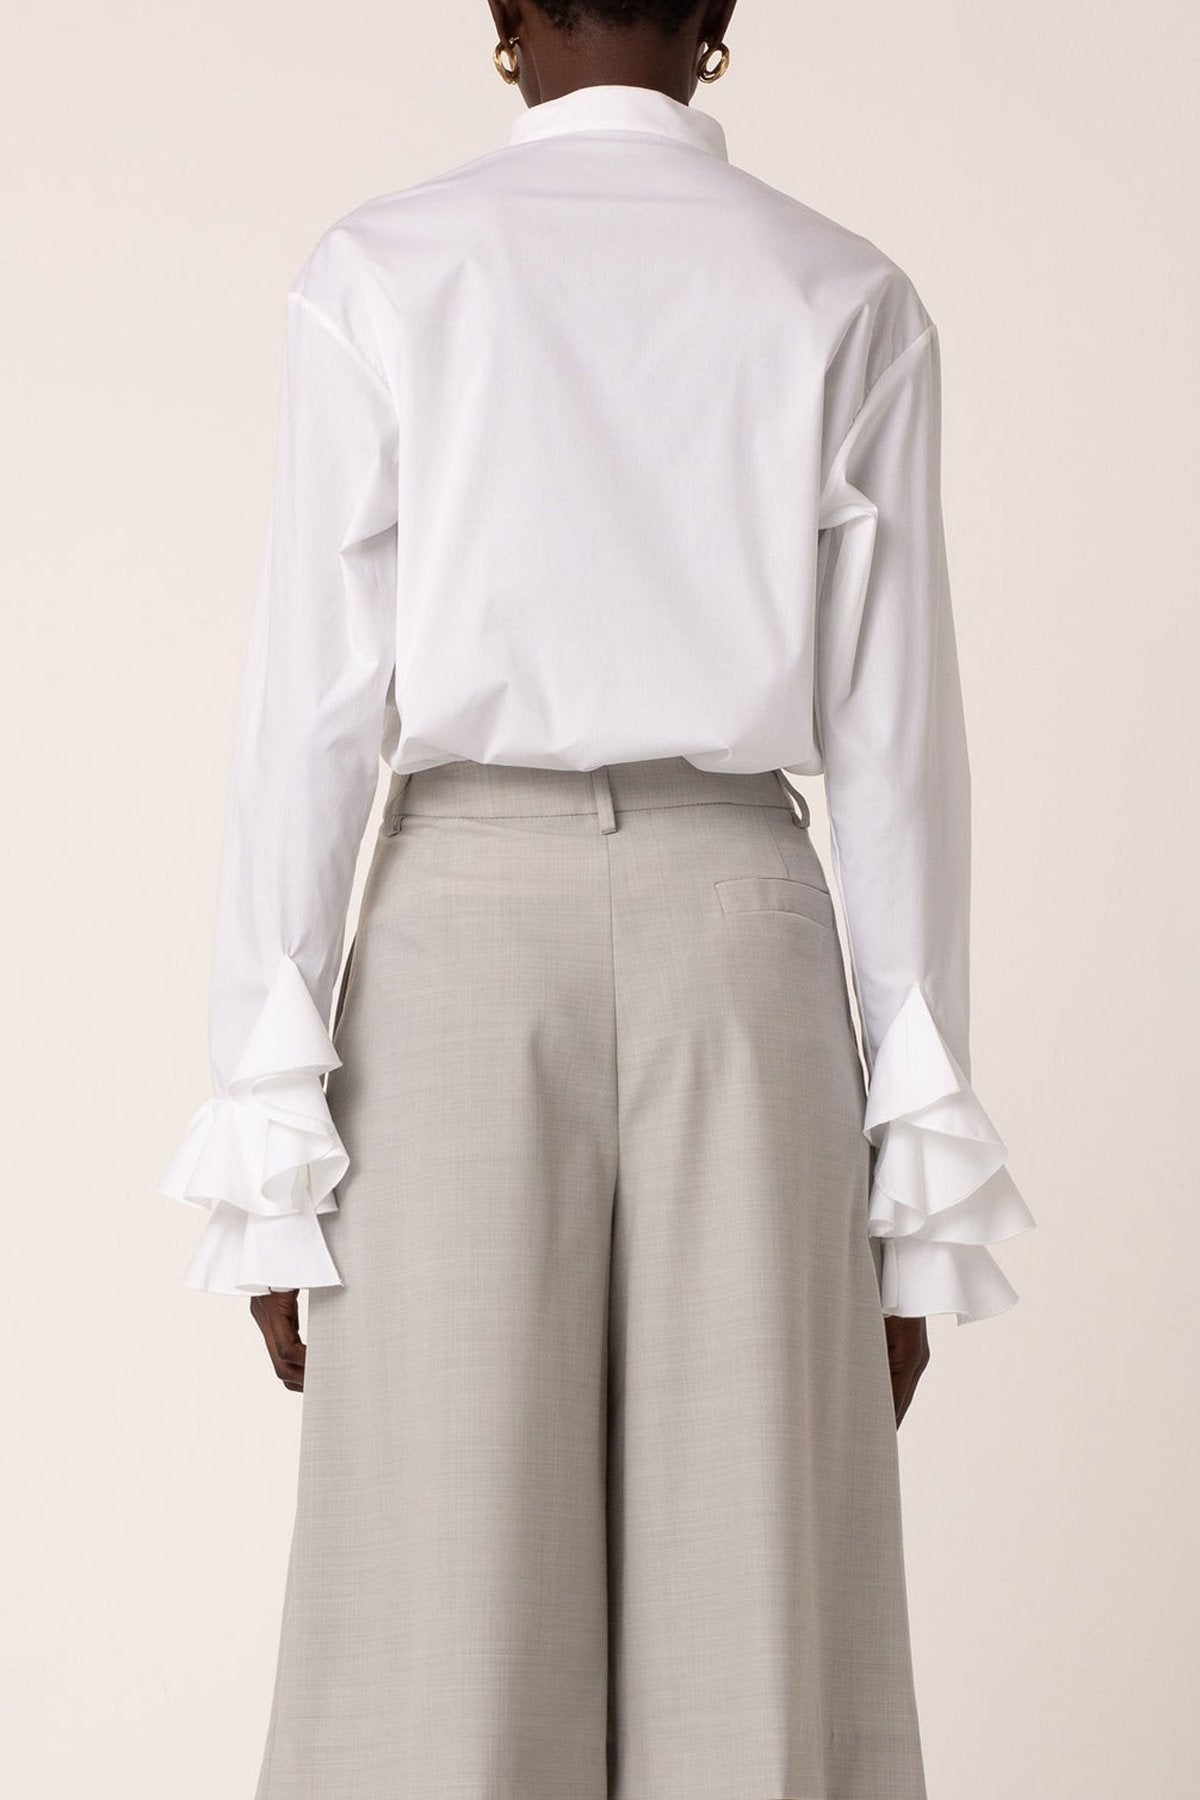 Flourish Flounce Cuff Shirt in White - shop-olivia.com